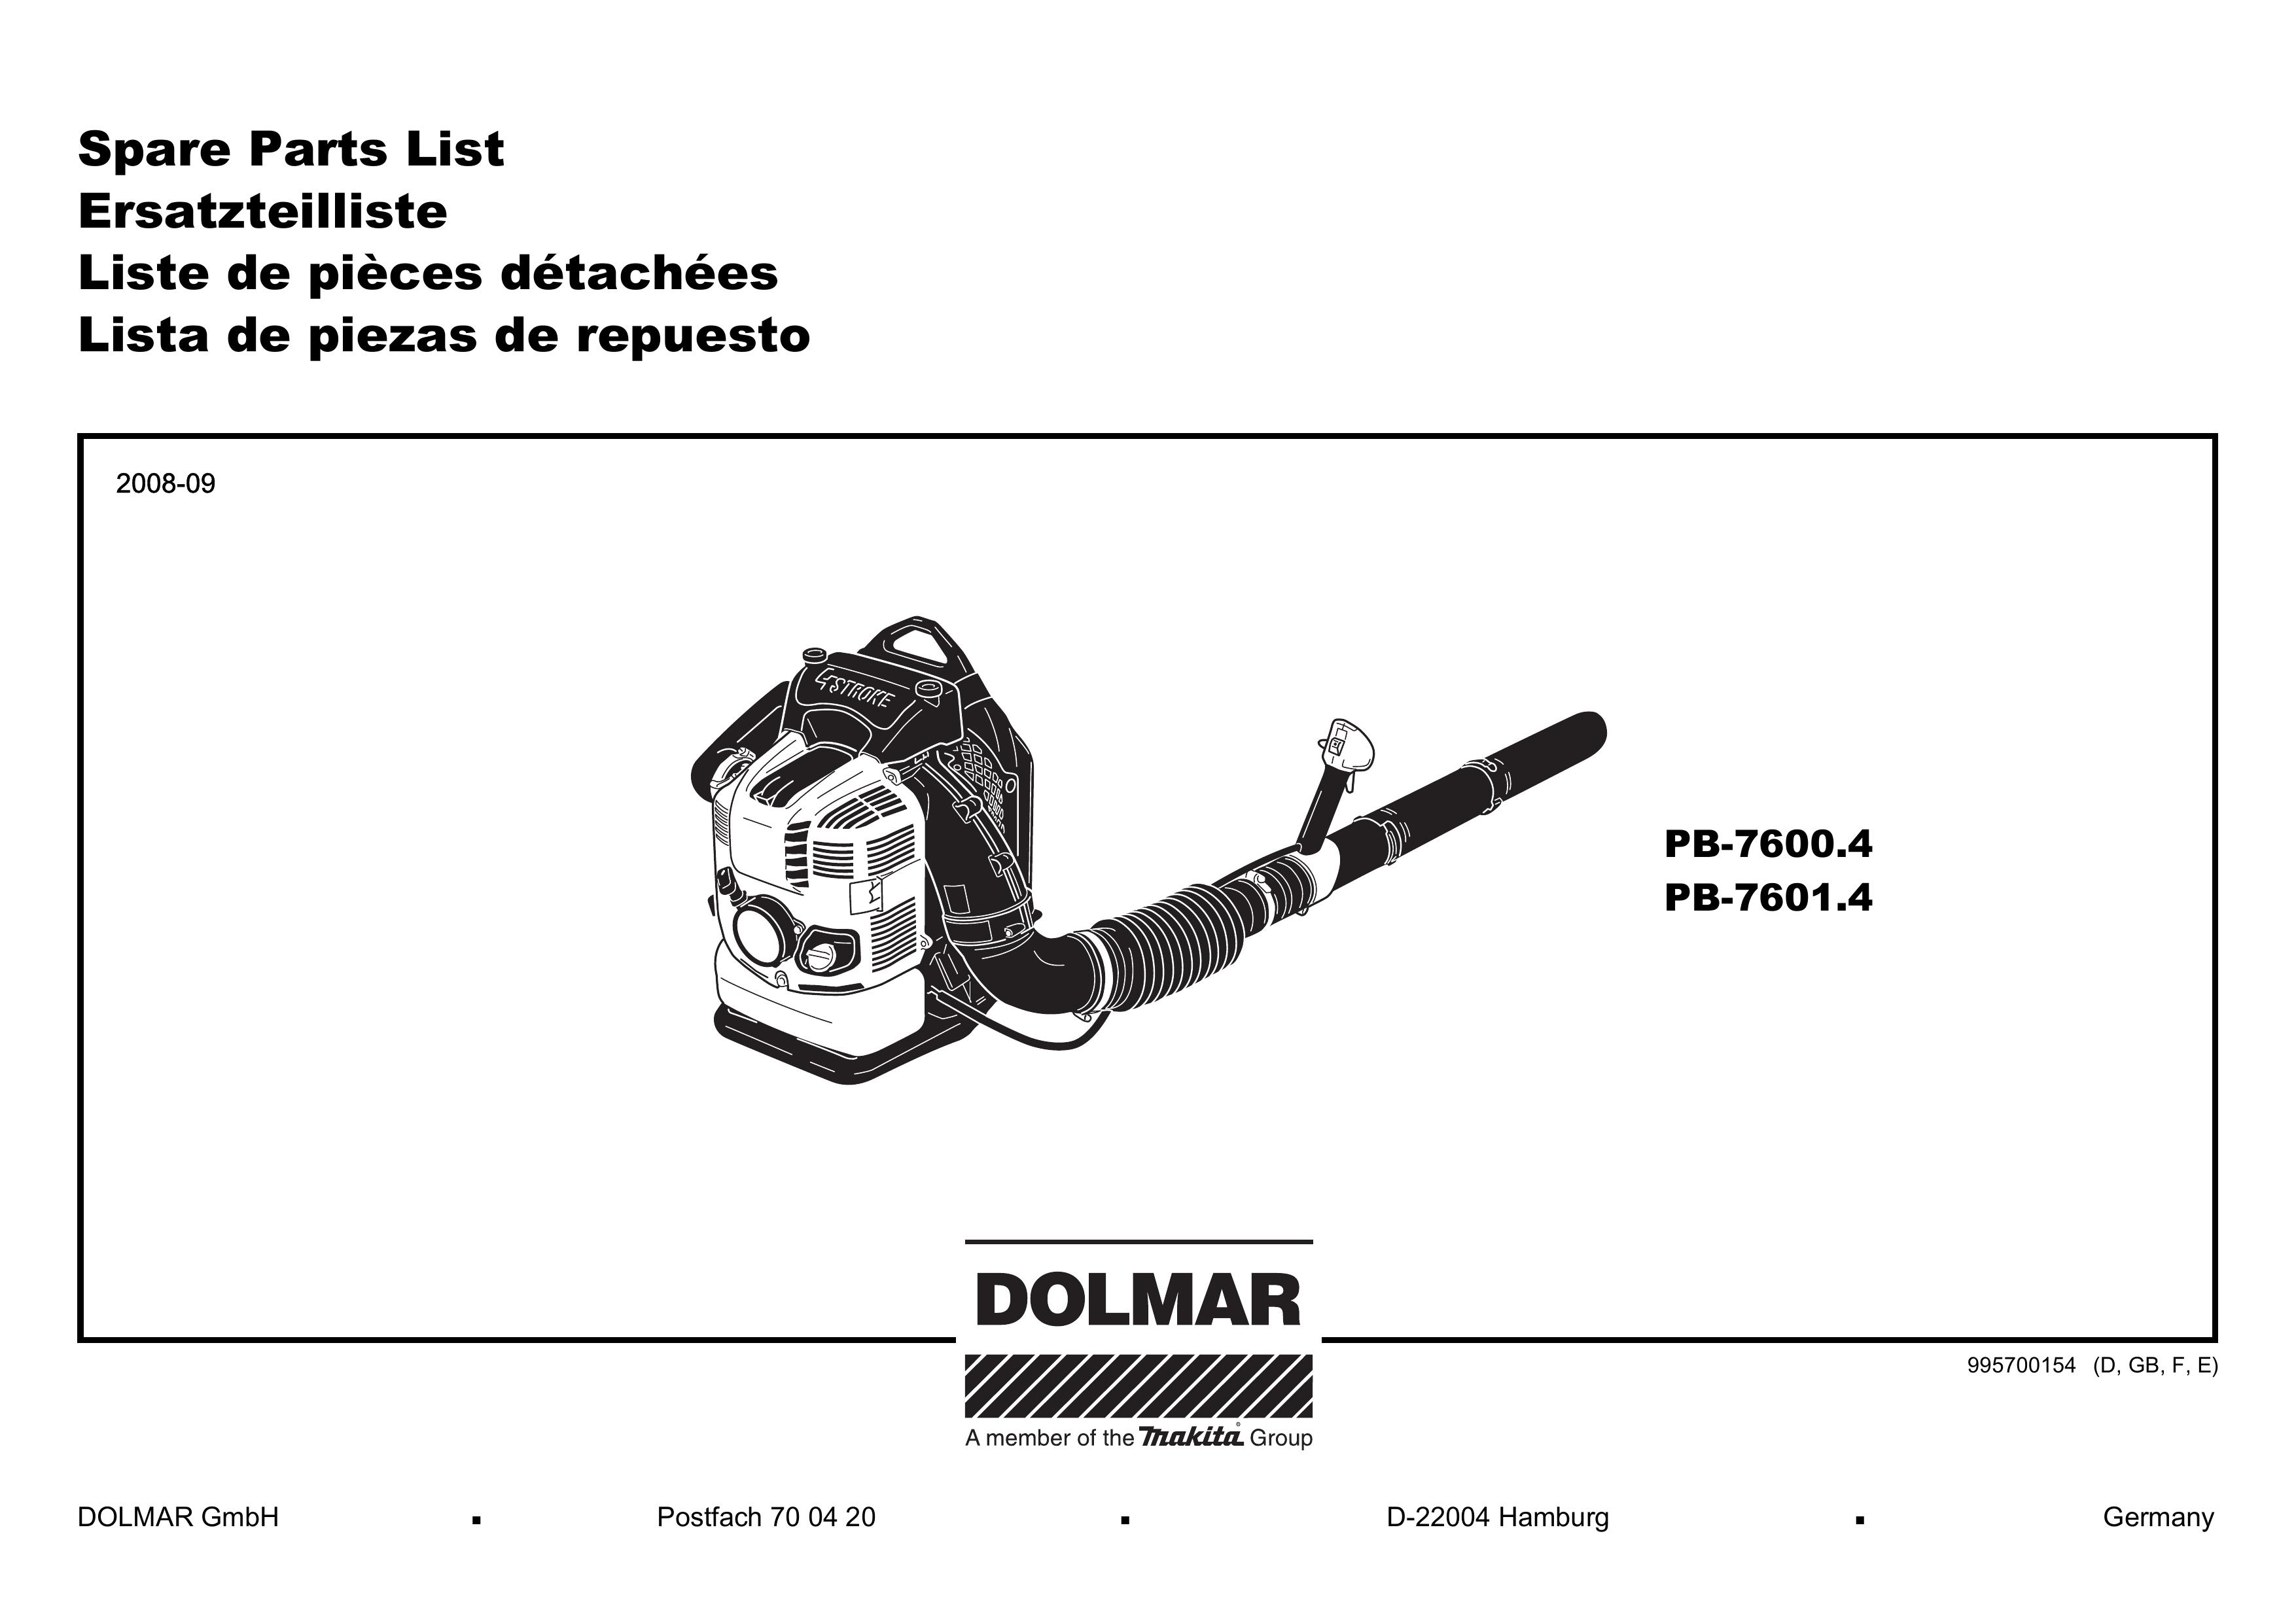 Dolmar PB-7600.4 Blower User Manual